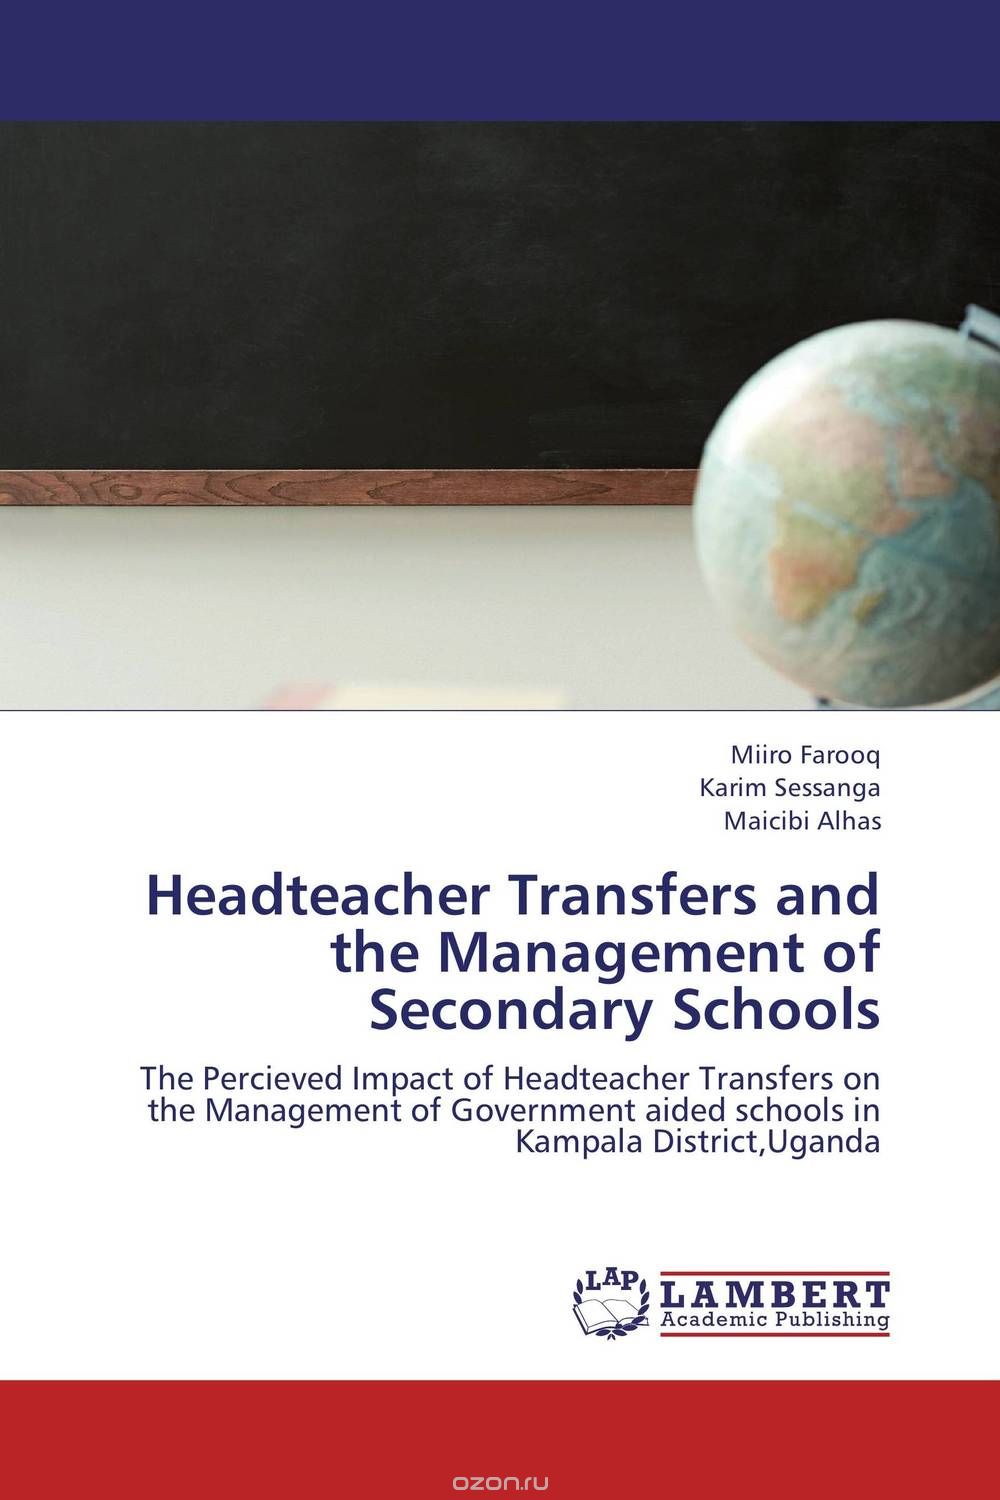 Скачать книгу "Headteacher Transfers and the Management of Secondary Schools"